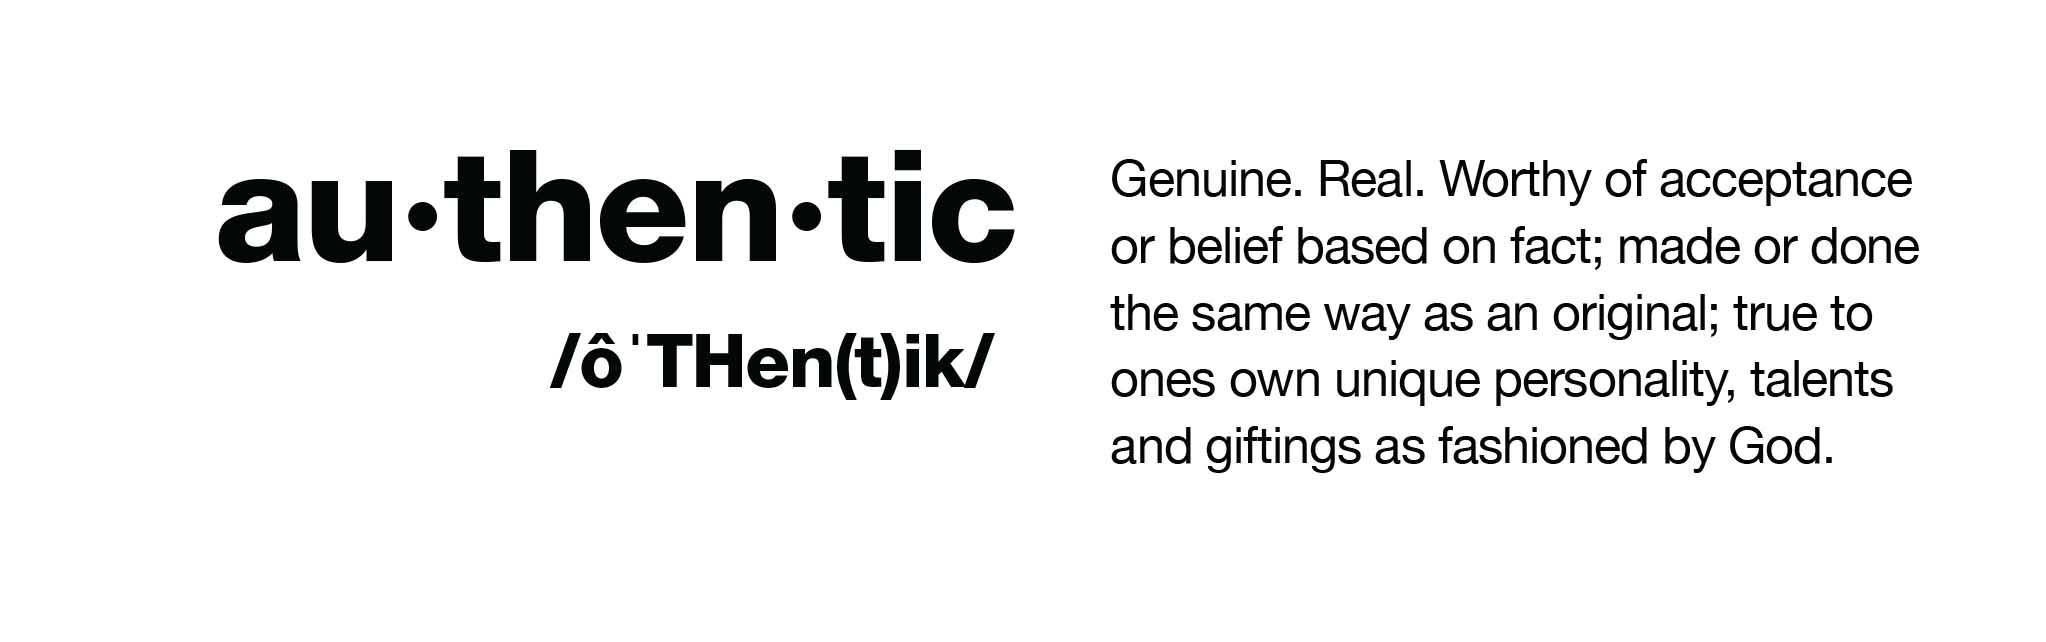 Authentic - definition